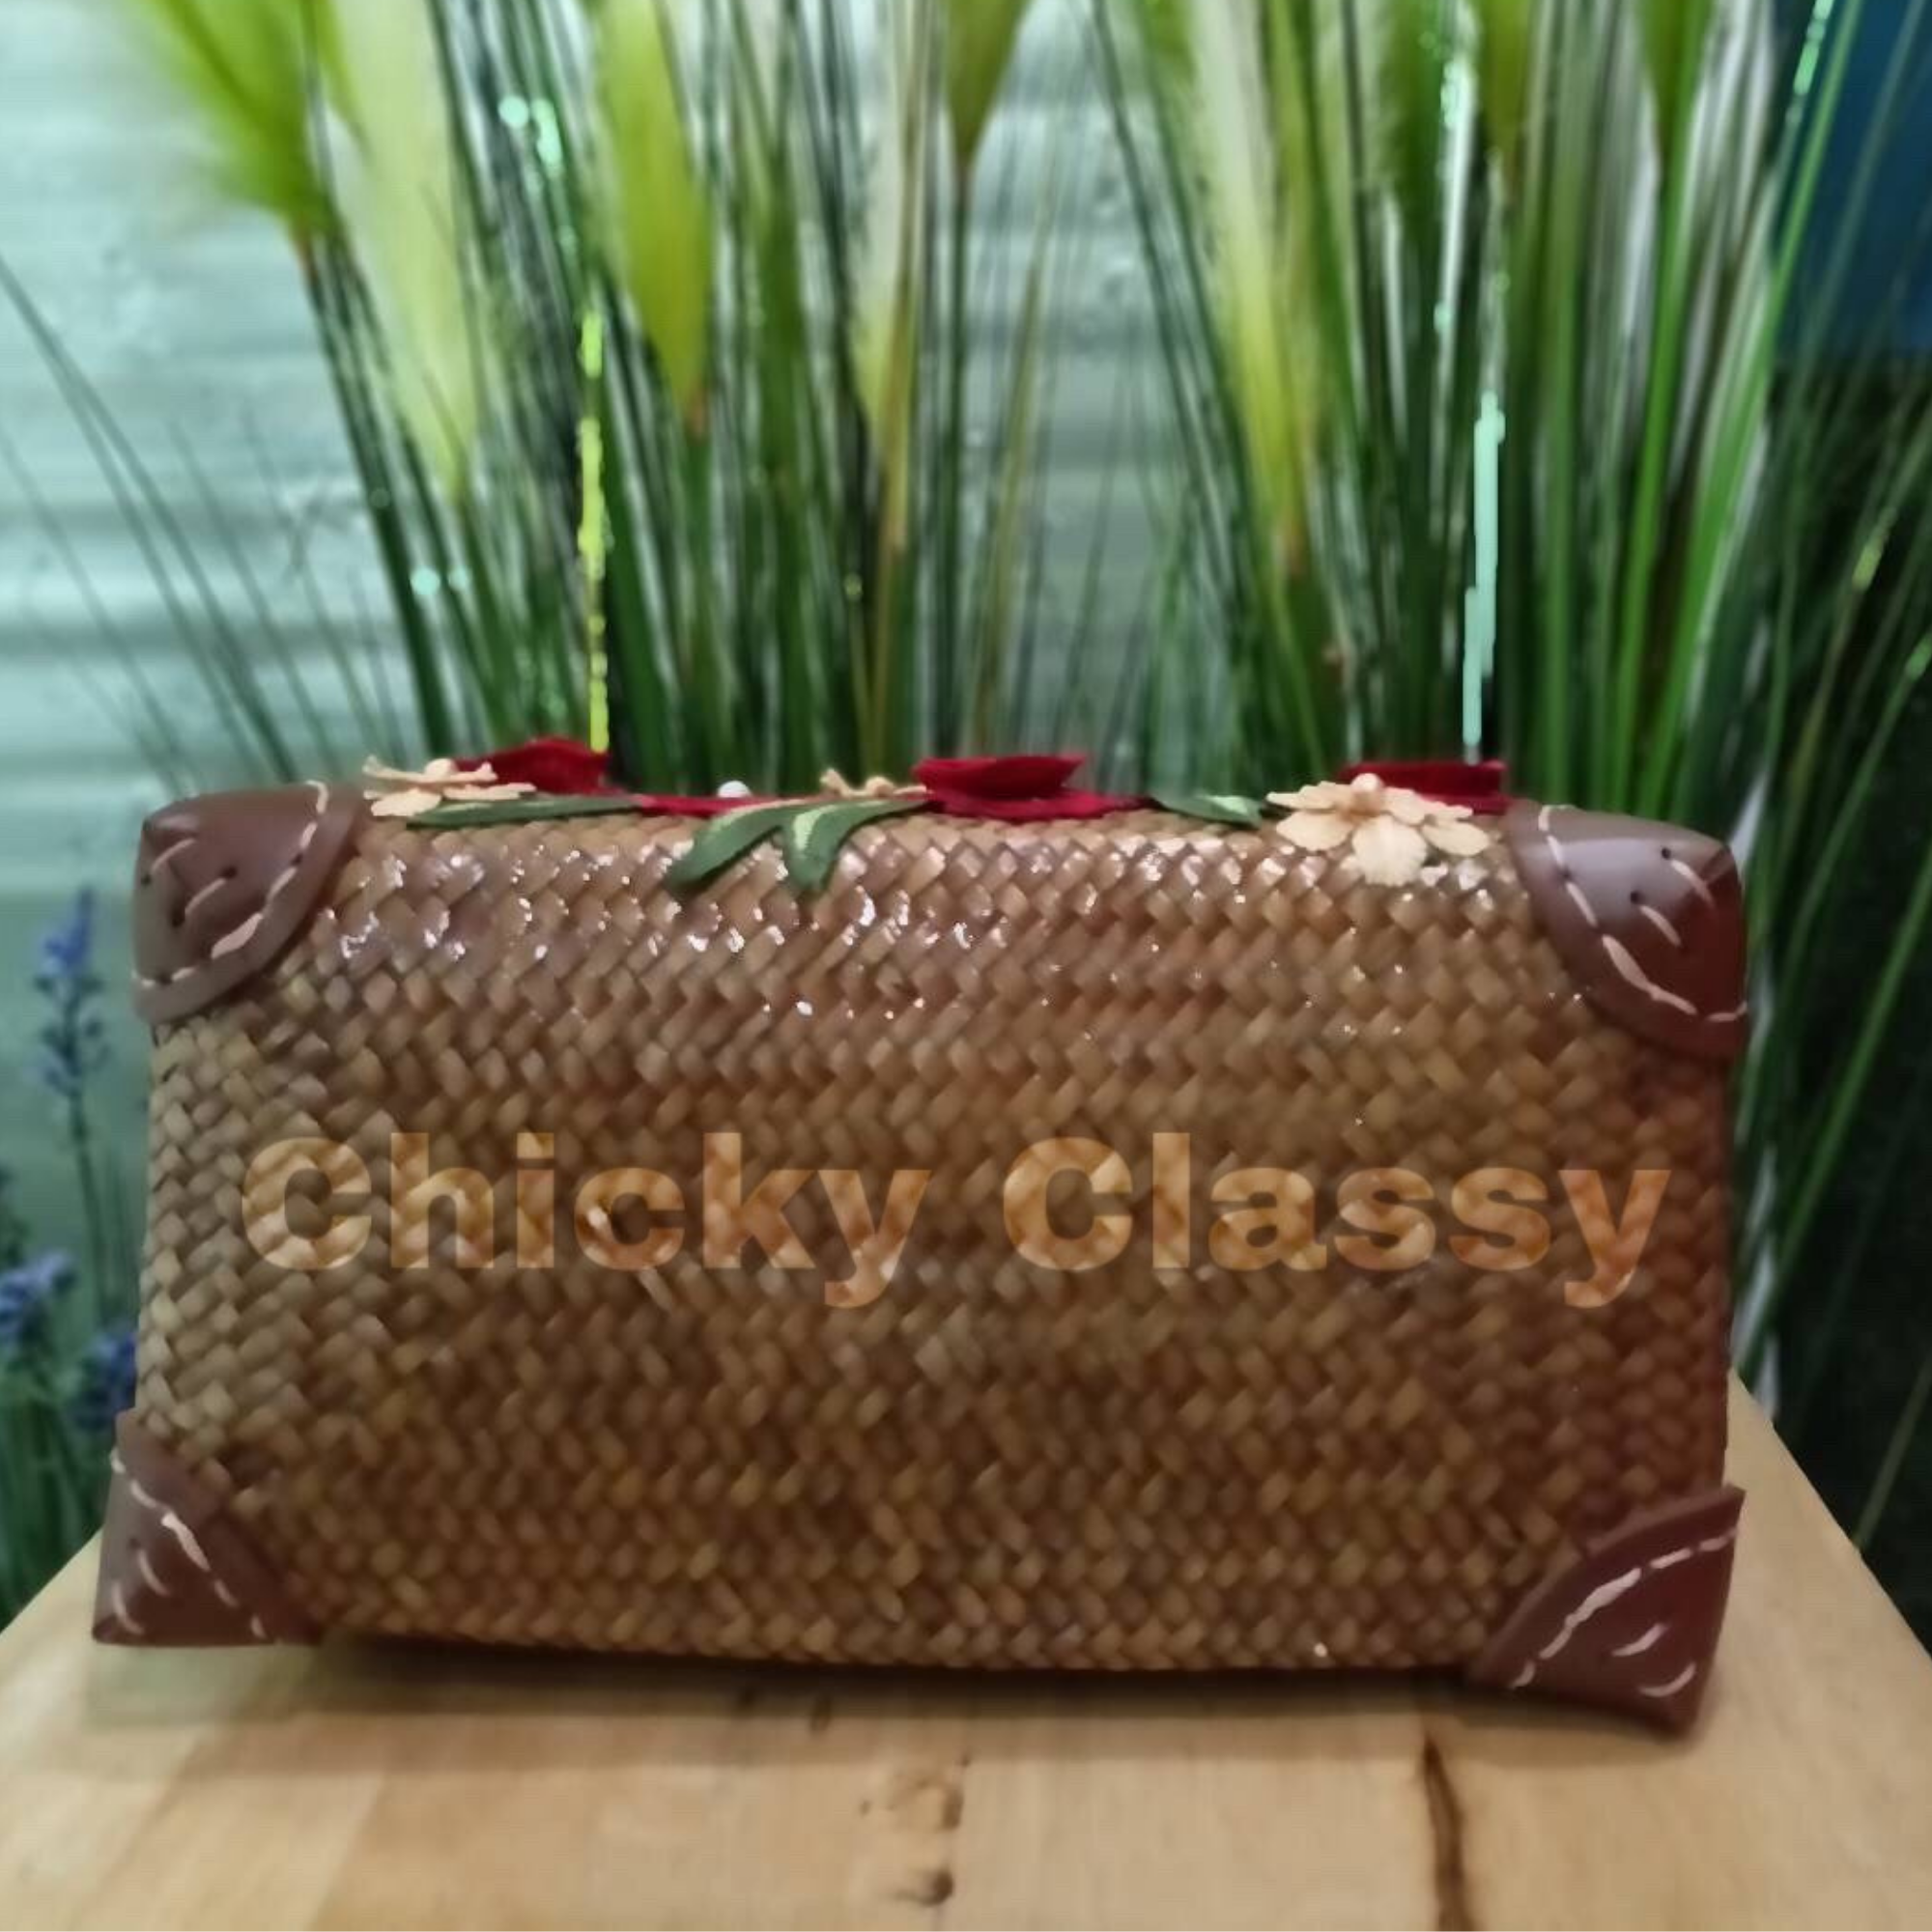 Amazing rectangle size straw beach bag